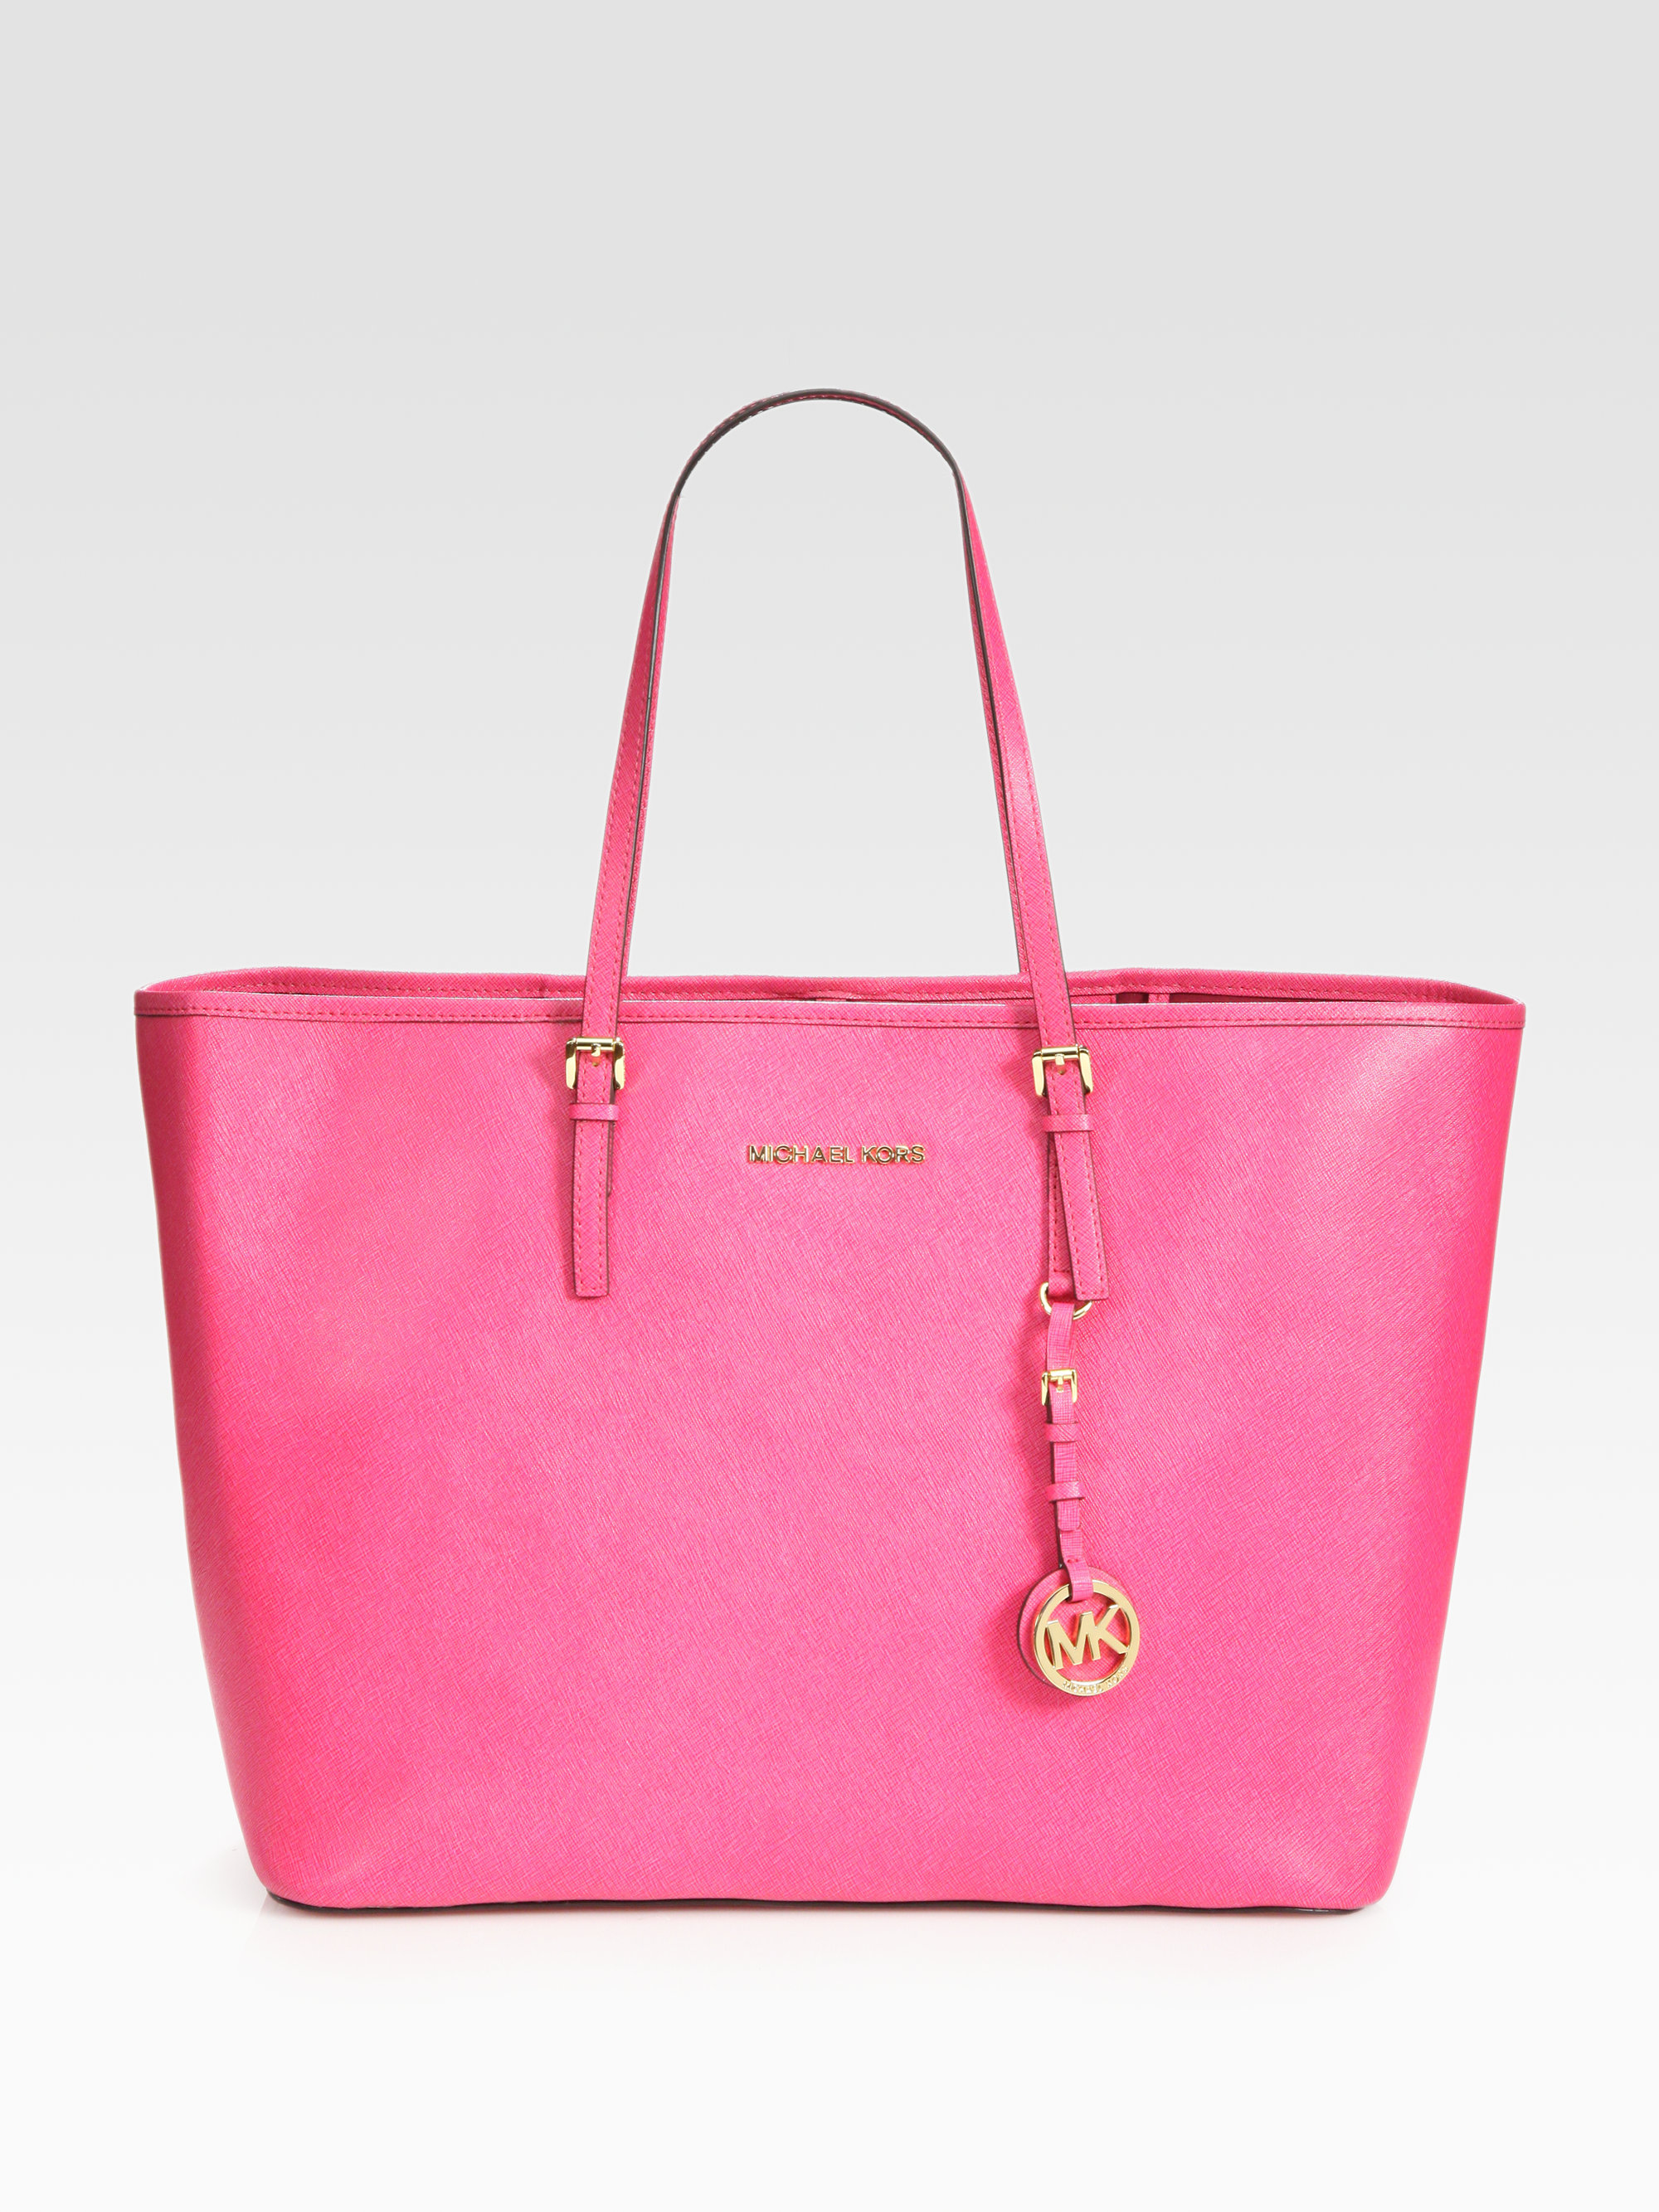 Michael Kors Pink Purse Handbag | semashow.com